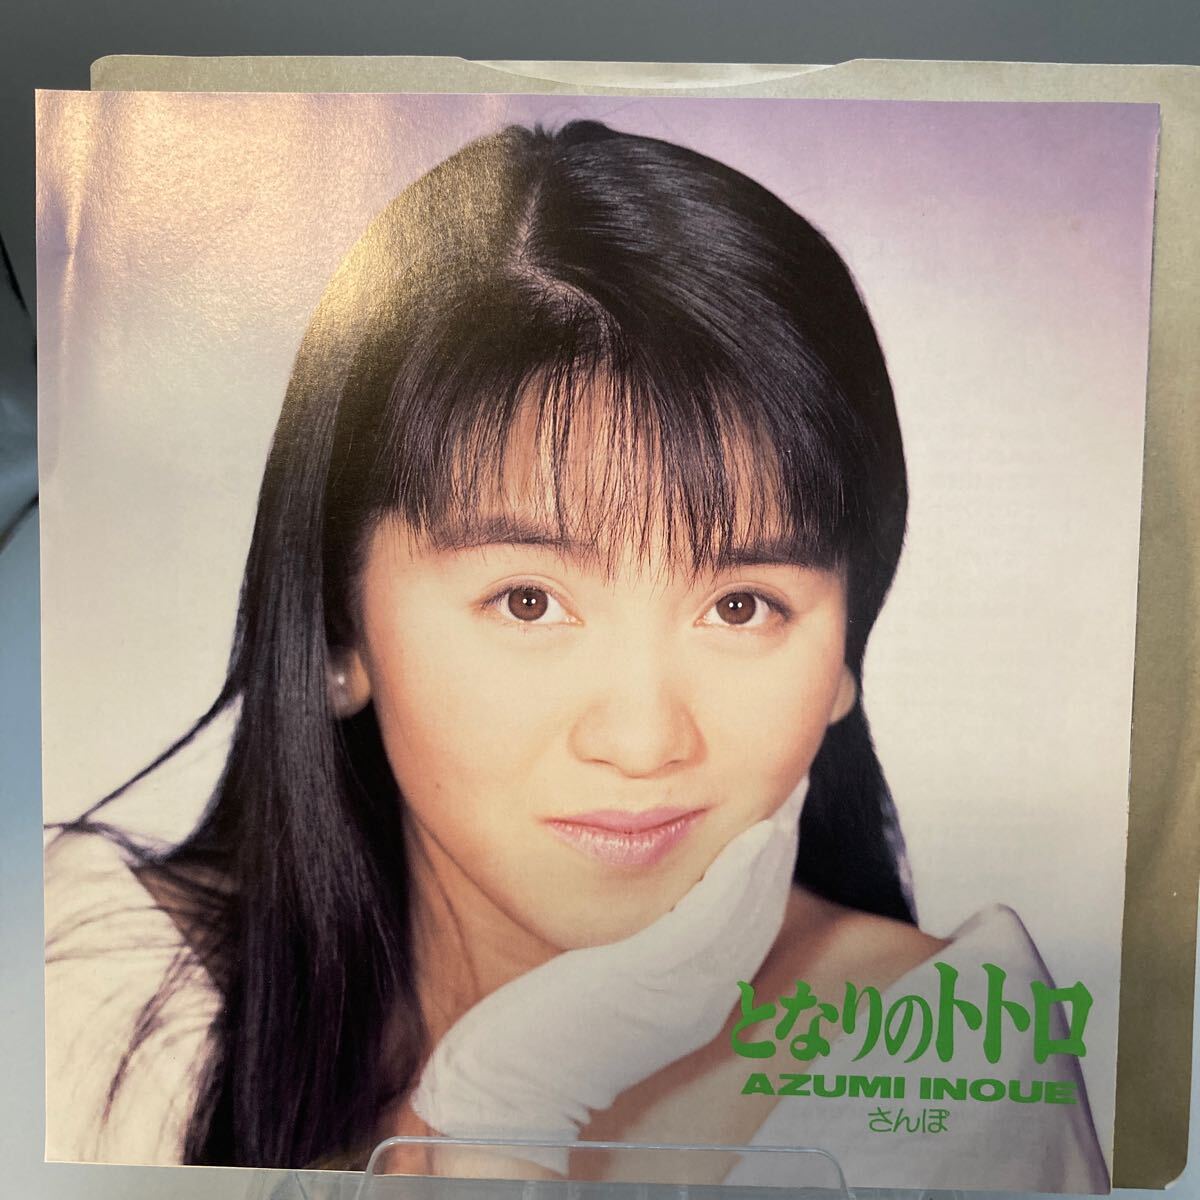  reproduction excellent ultimate beautiful record EP/ Inoue .../ Tonari no Totoro cw san ./ anime movie [ Tonari no Totoro ]../ Miyazaki .,. stone yield /1988 year 3 month 